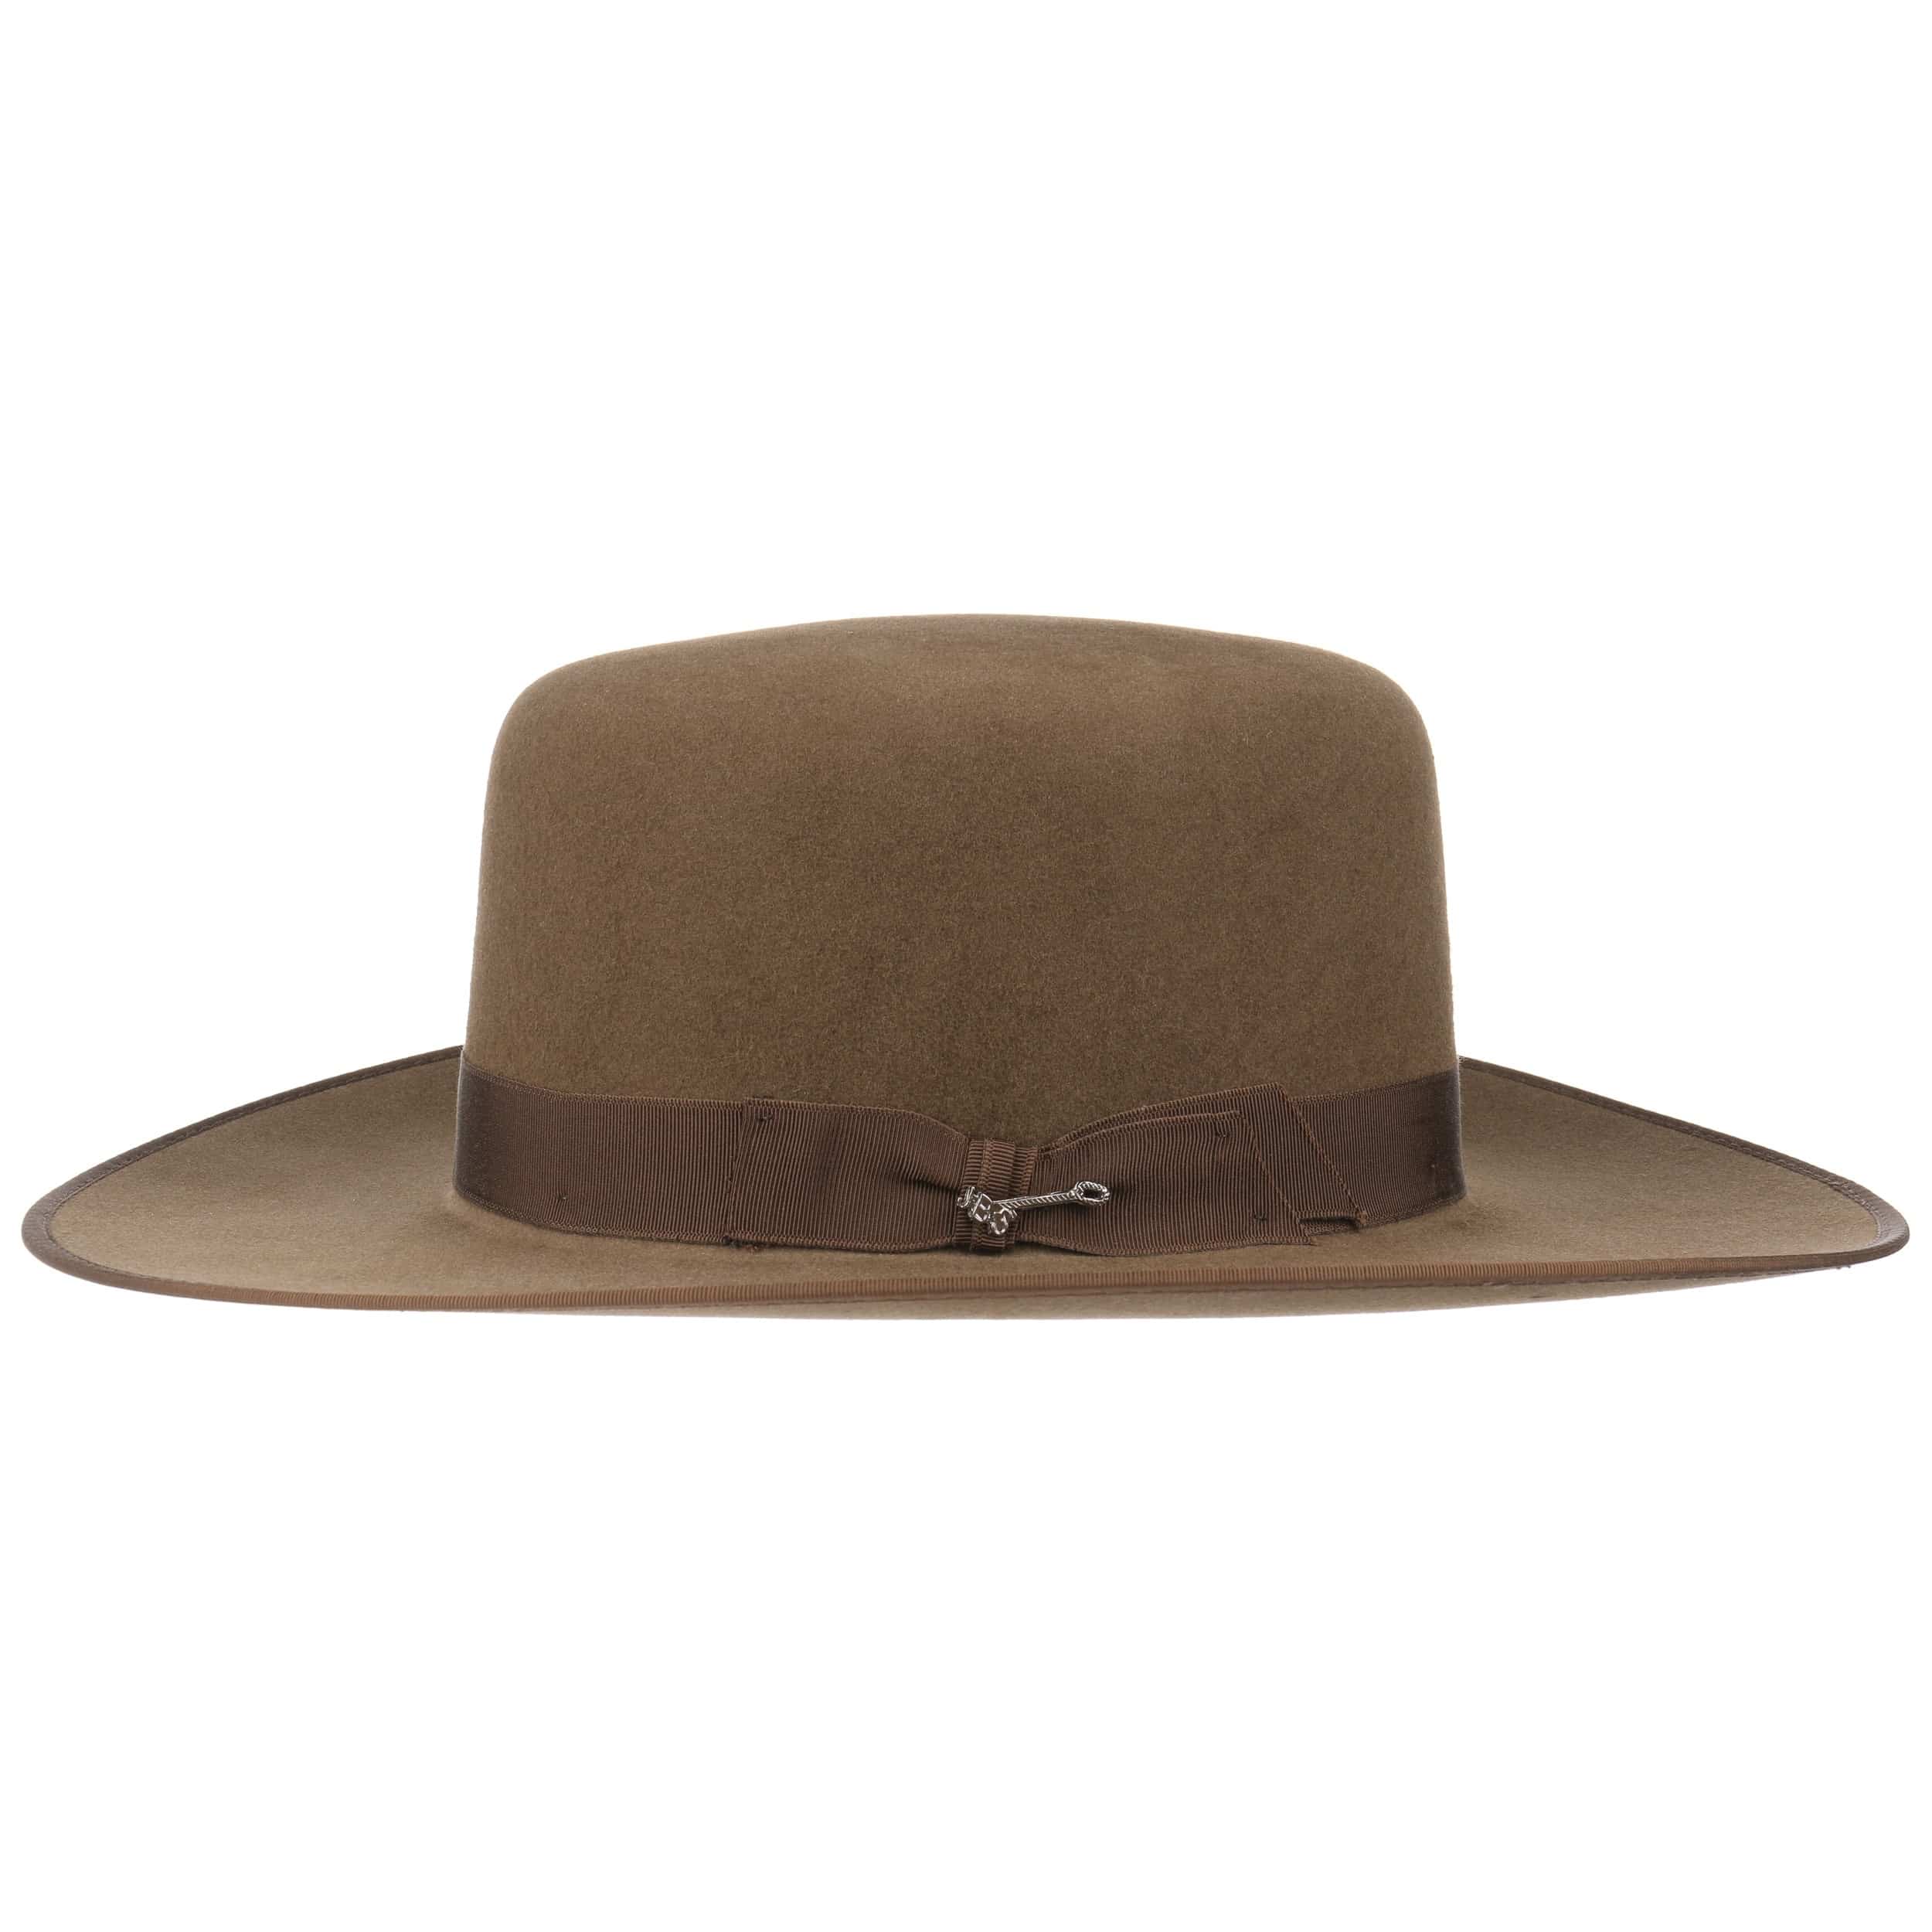 Austral Western Hat on Sale